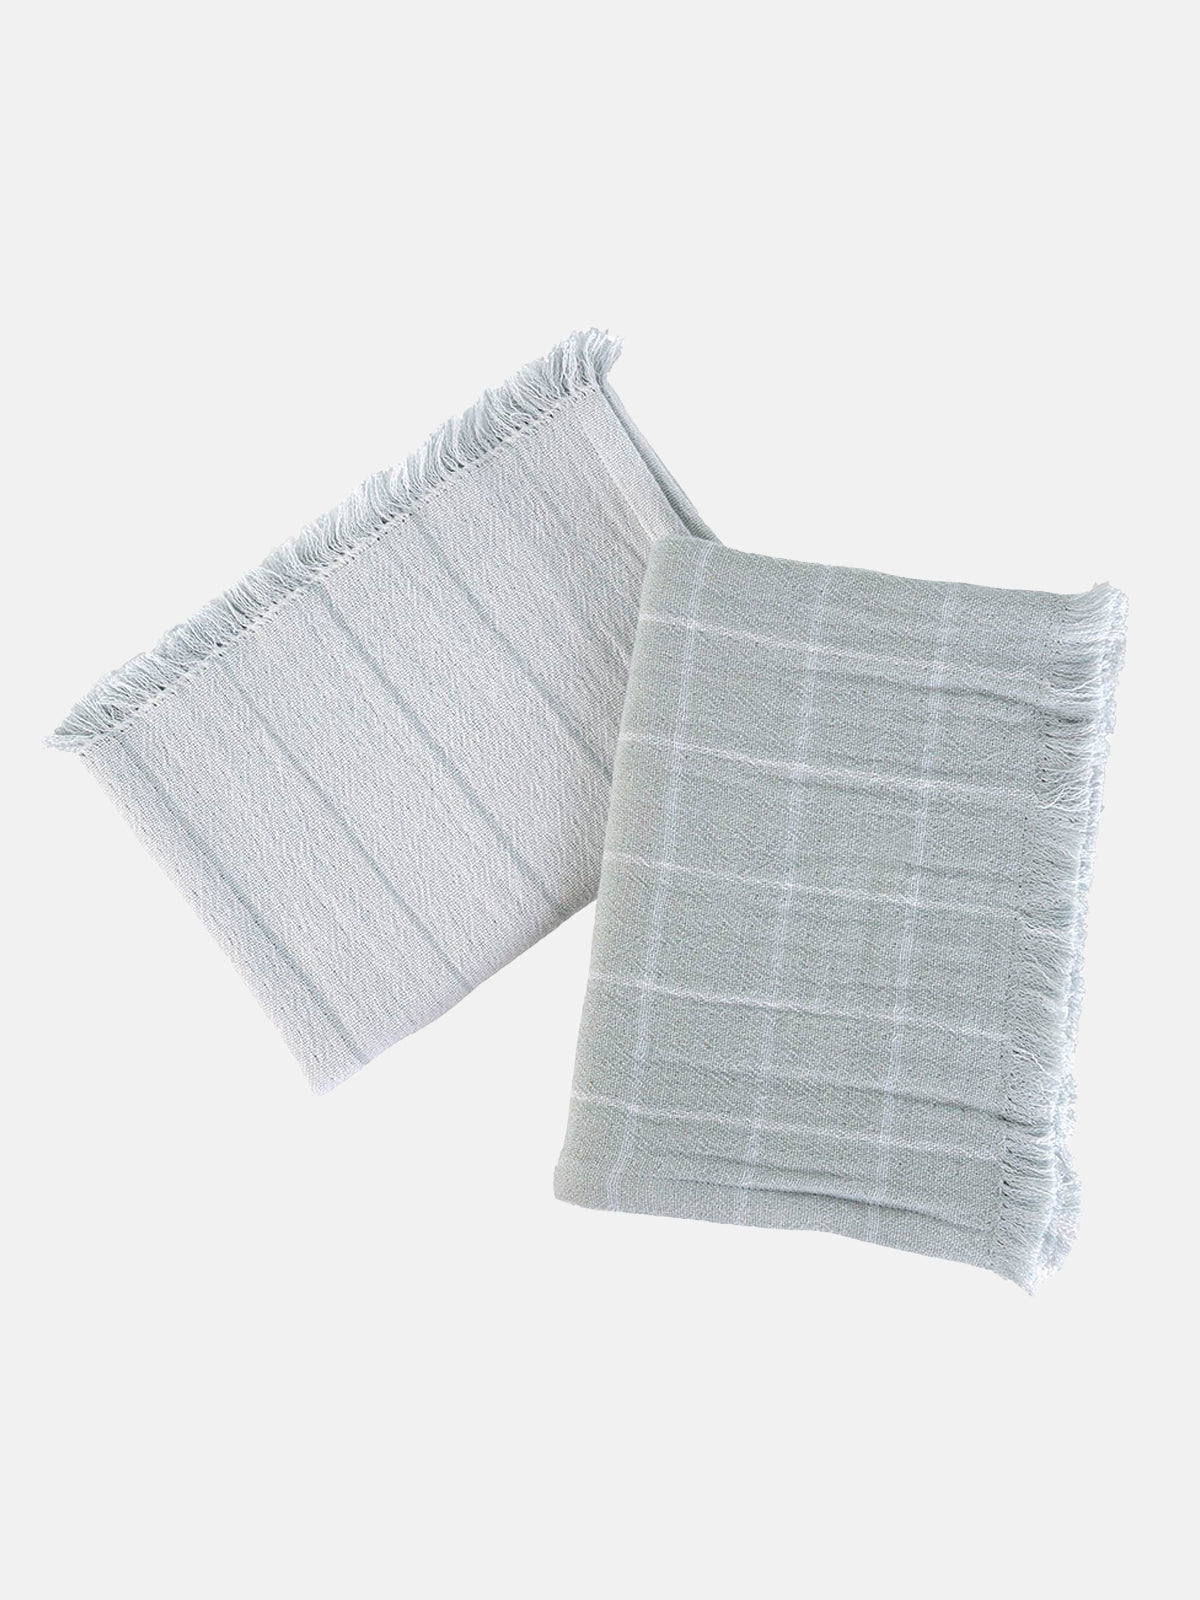 Grain Sack Tea Towel | Kitchen Towel | CHOOSE YOUR STRIPE | sweetannieacres